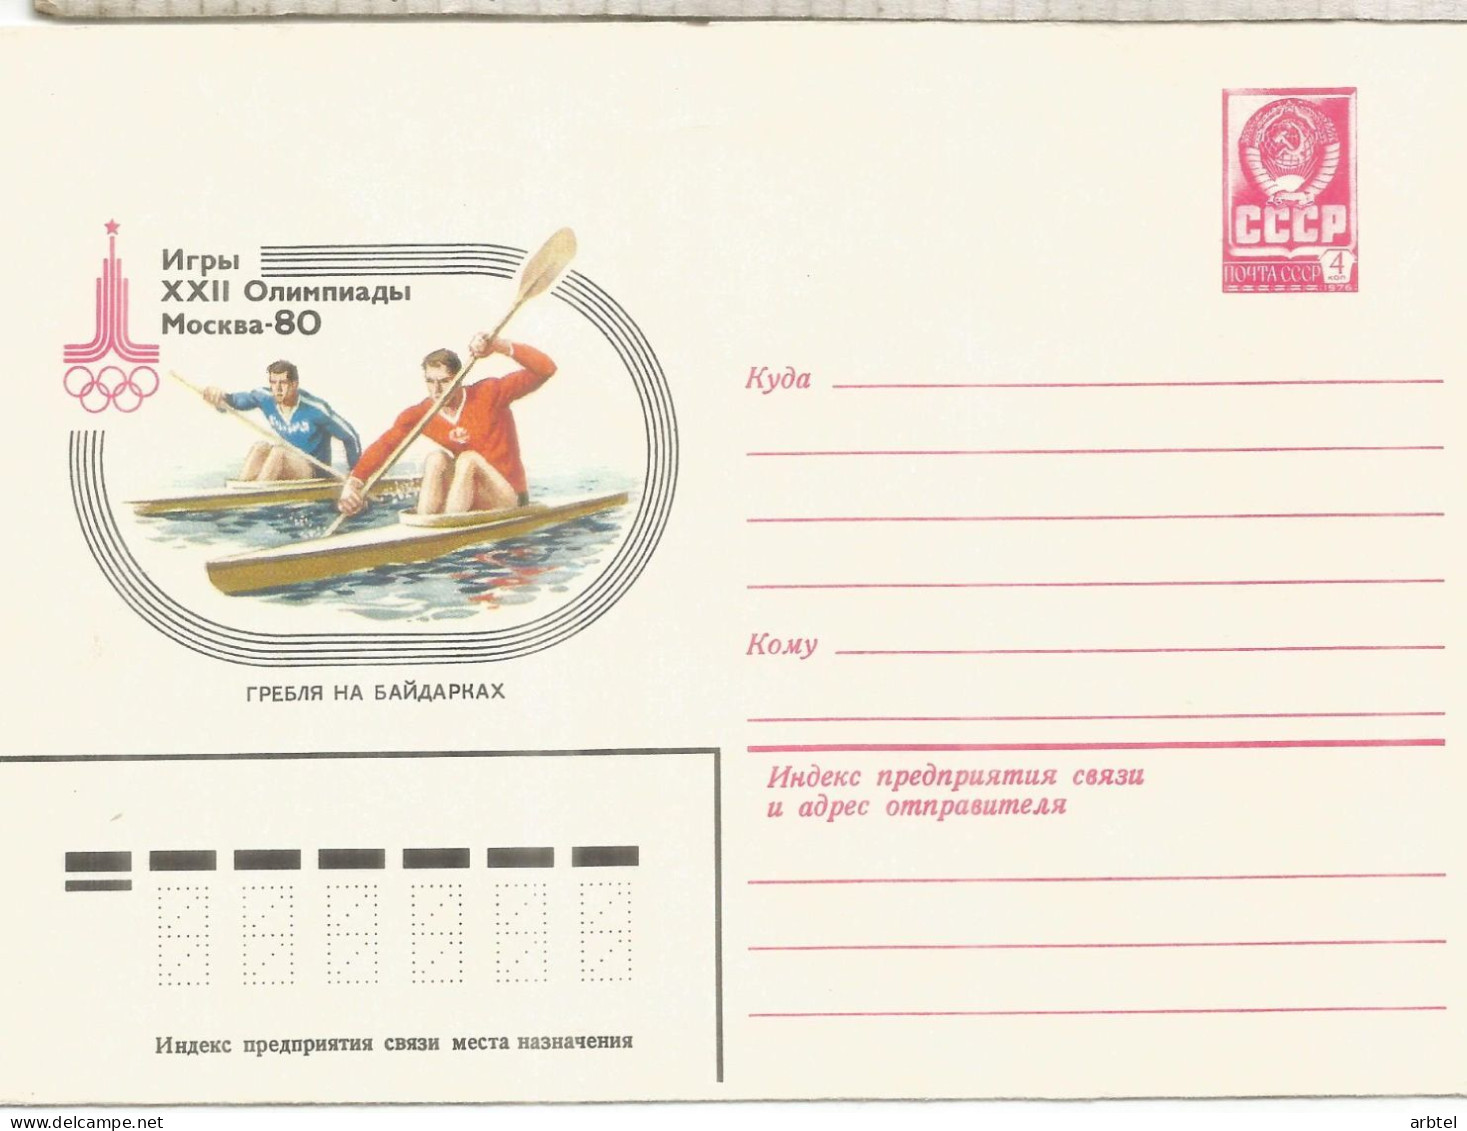 URSS SOVIET UNION ENTERO POSTAL REMO ROWING JUEGOS OLIMPICOS MOSCU 1980 - Rudersport